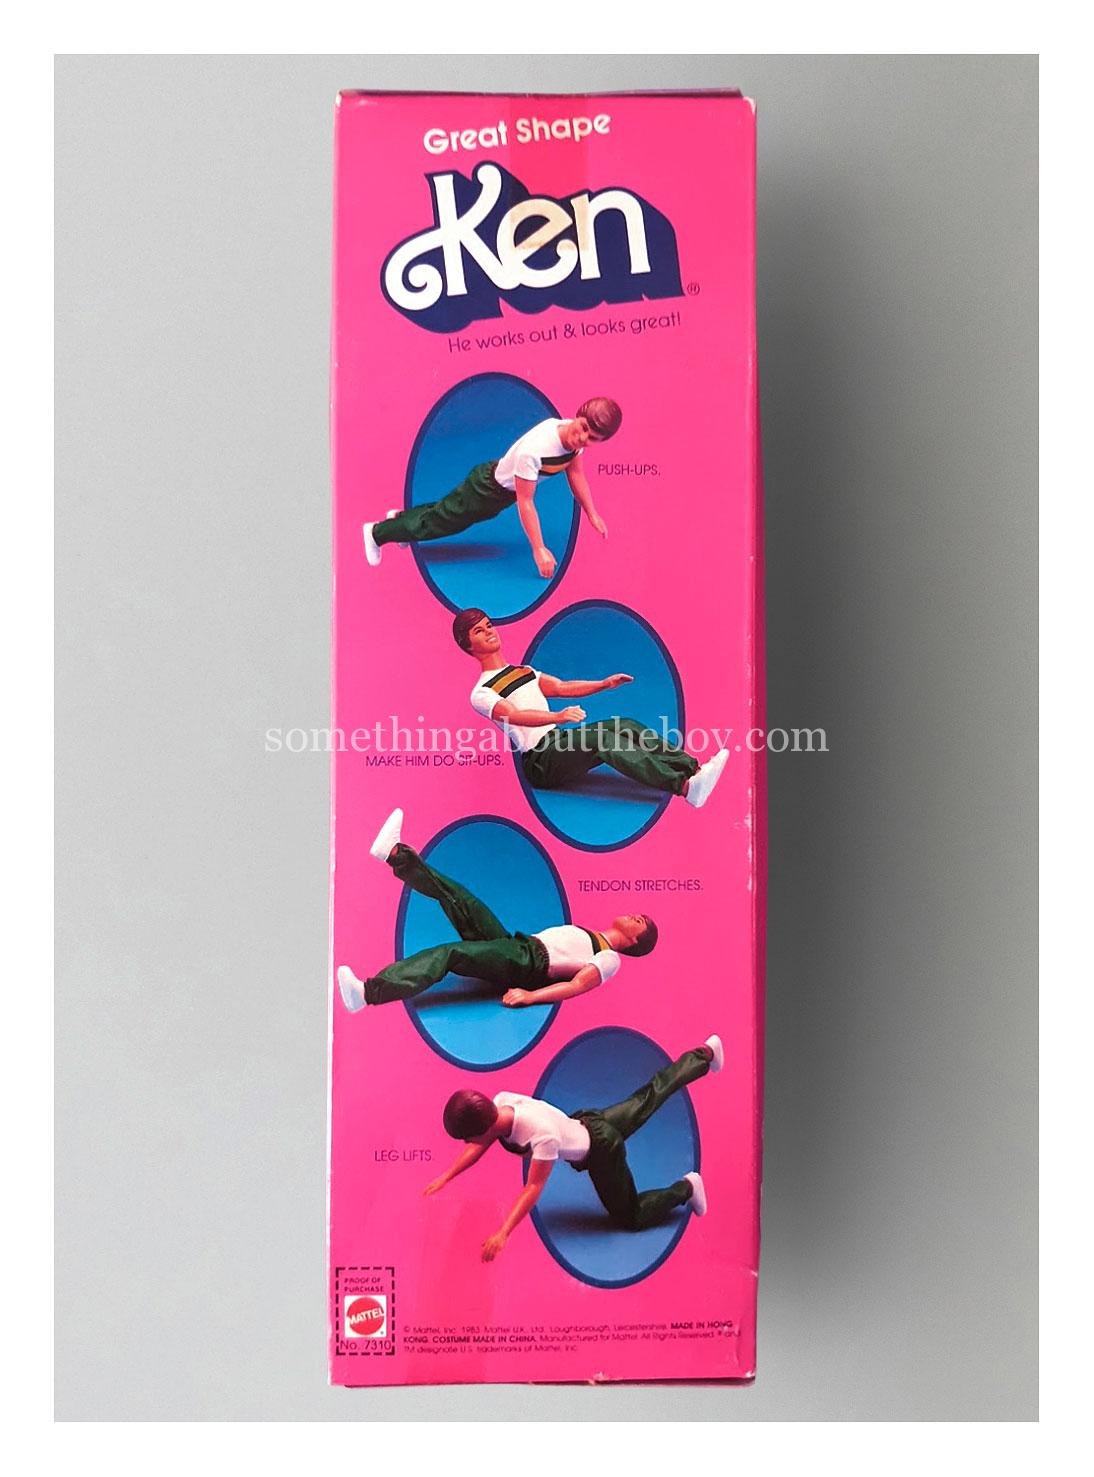 1984 #7310 Great Shape Ken (British version) packaging